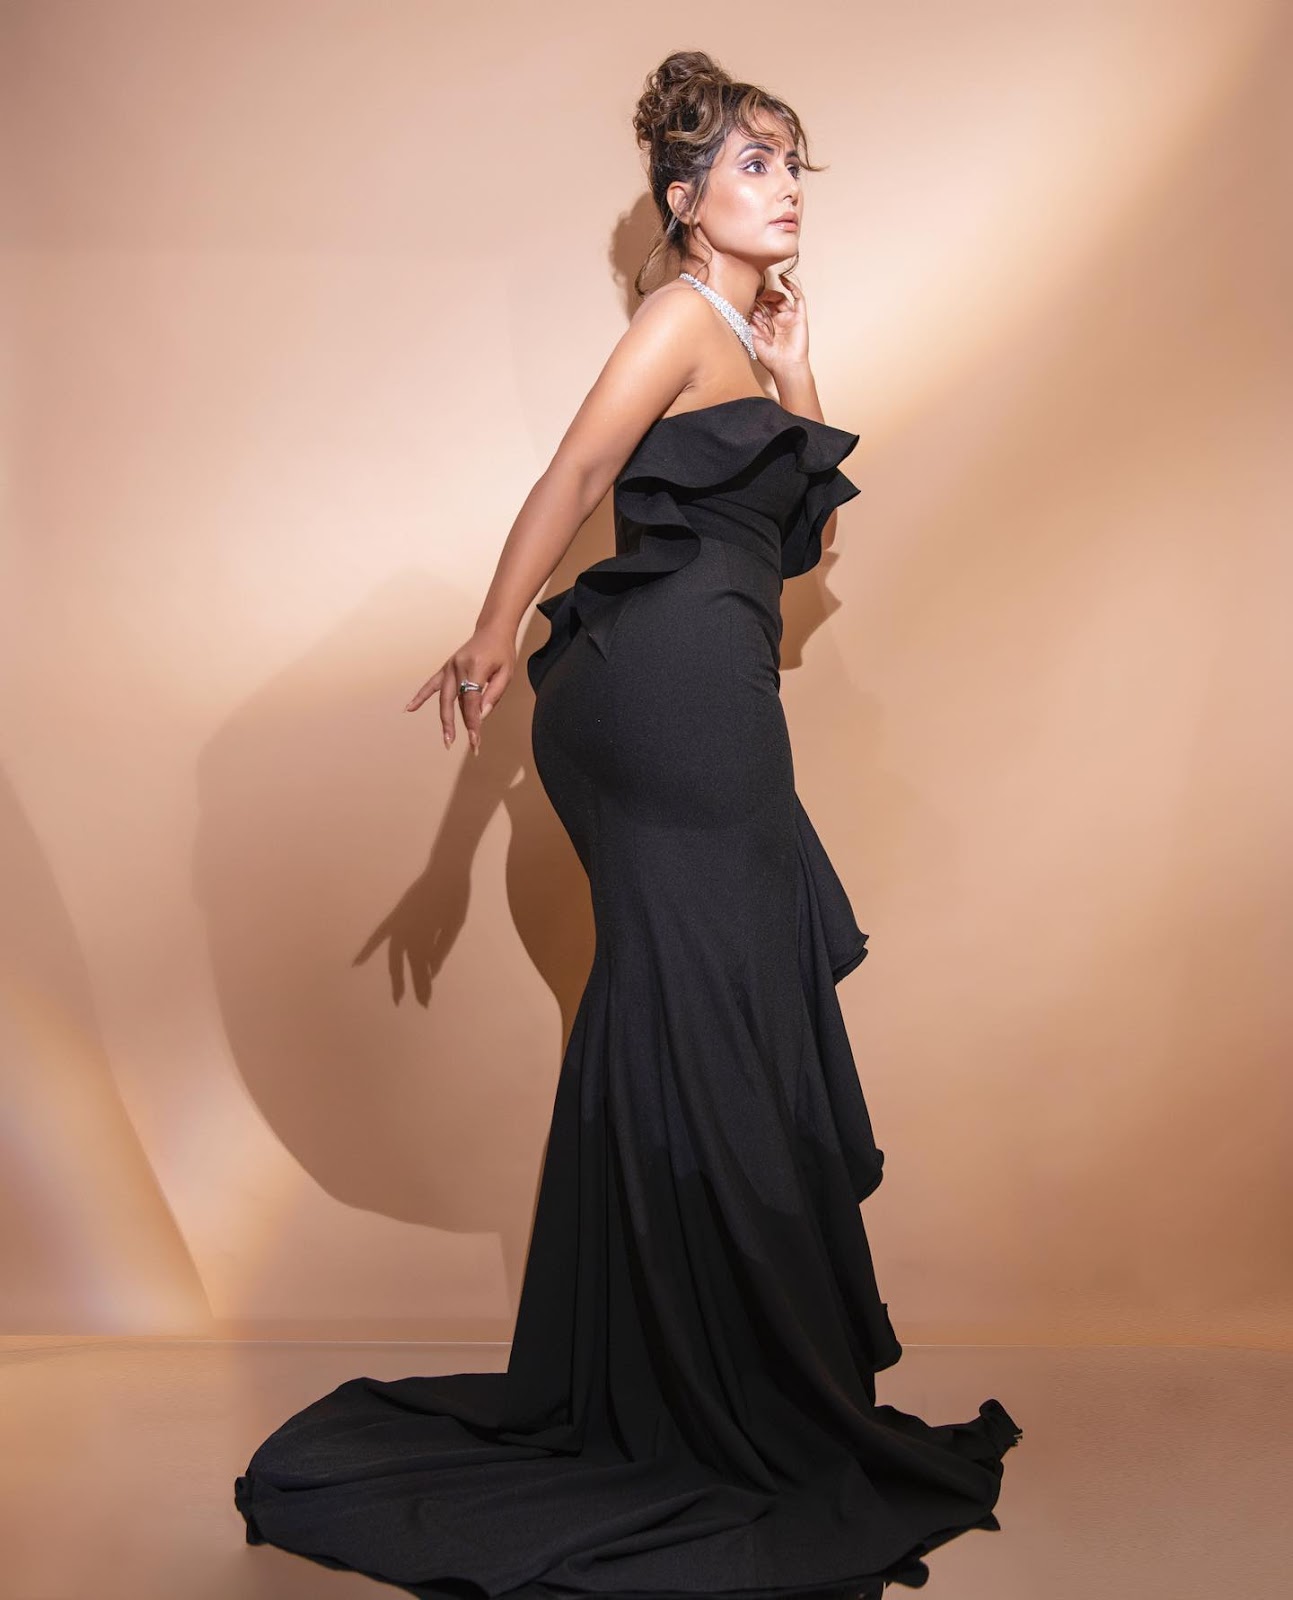 Hina Khan black dress stylish hot actress